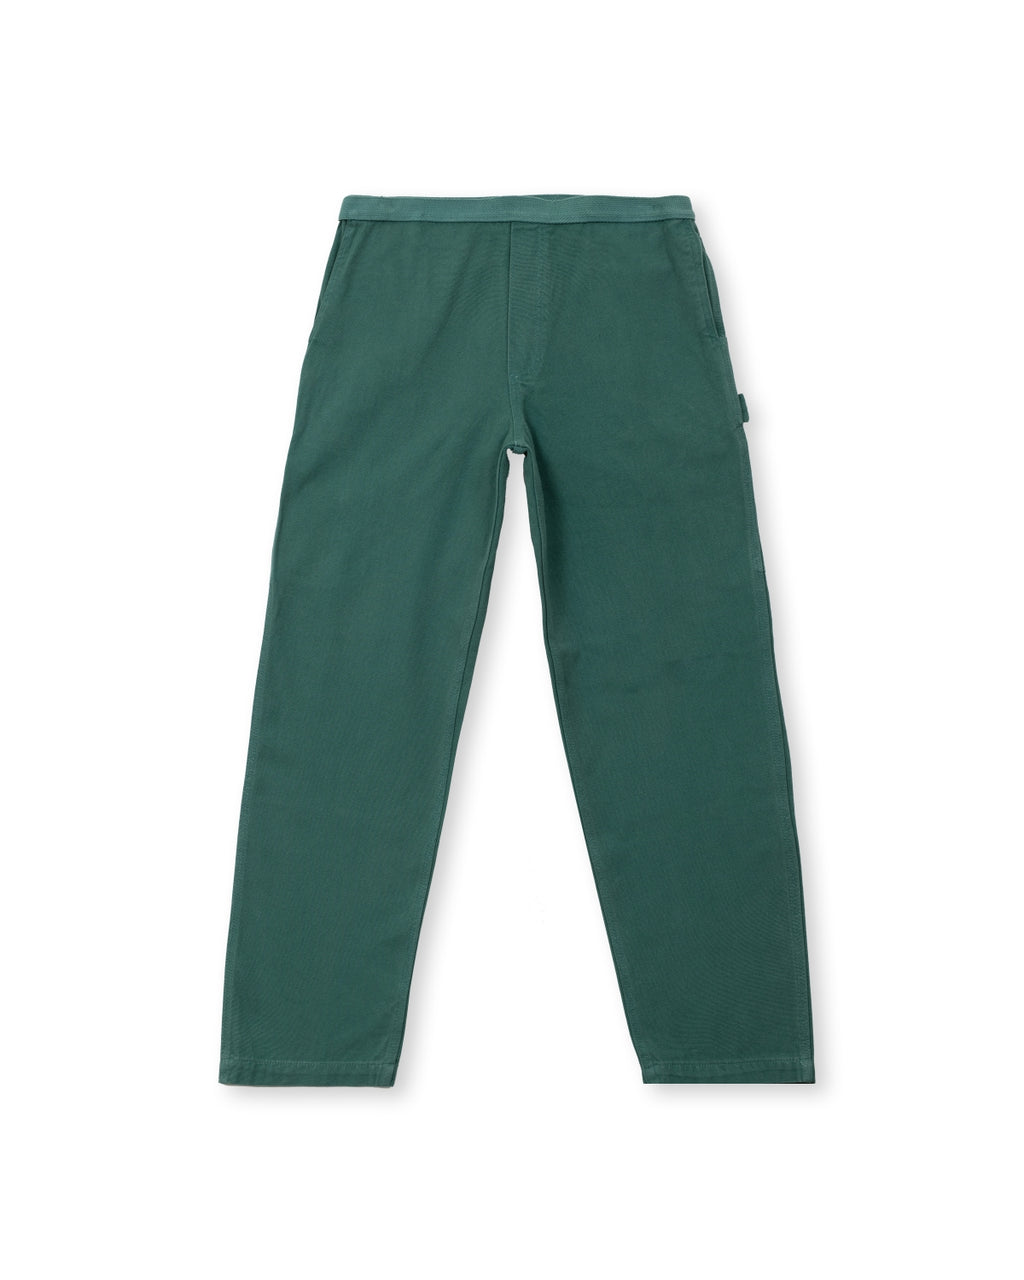 Washed Hard Ware/ Soft Wear Carpenter Pant - Green